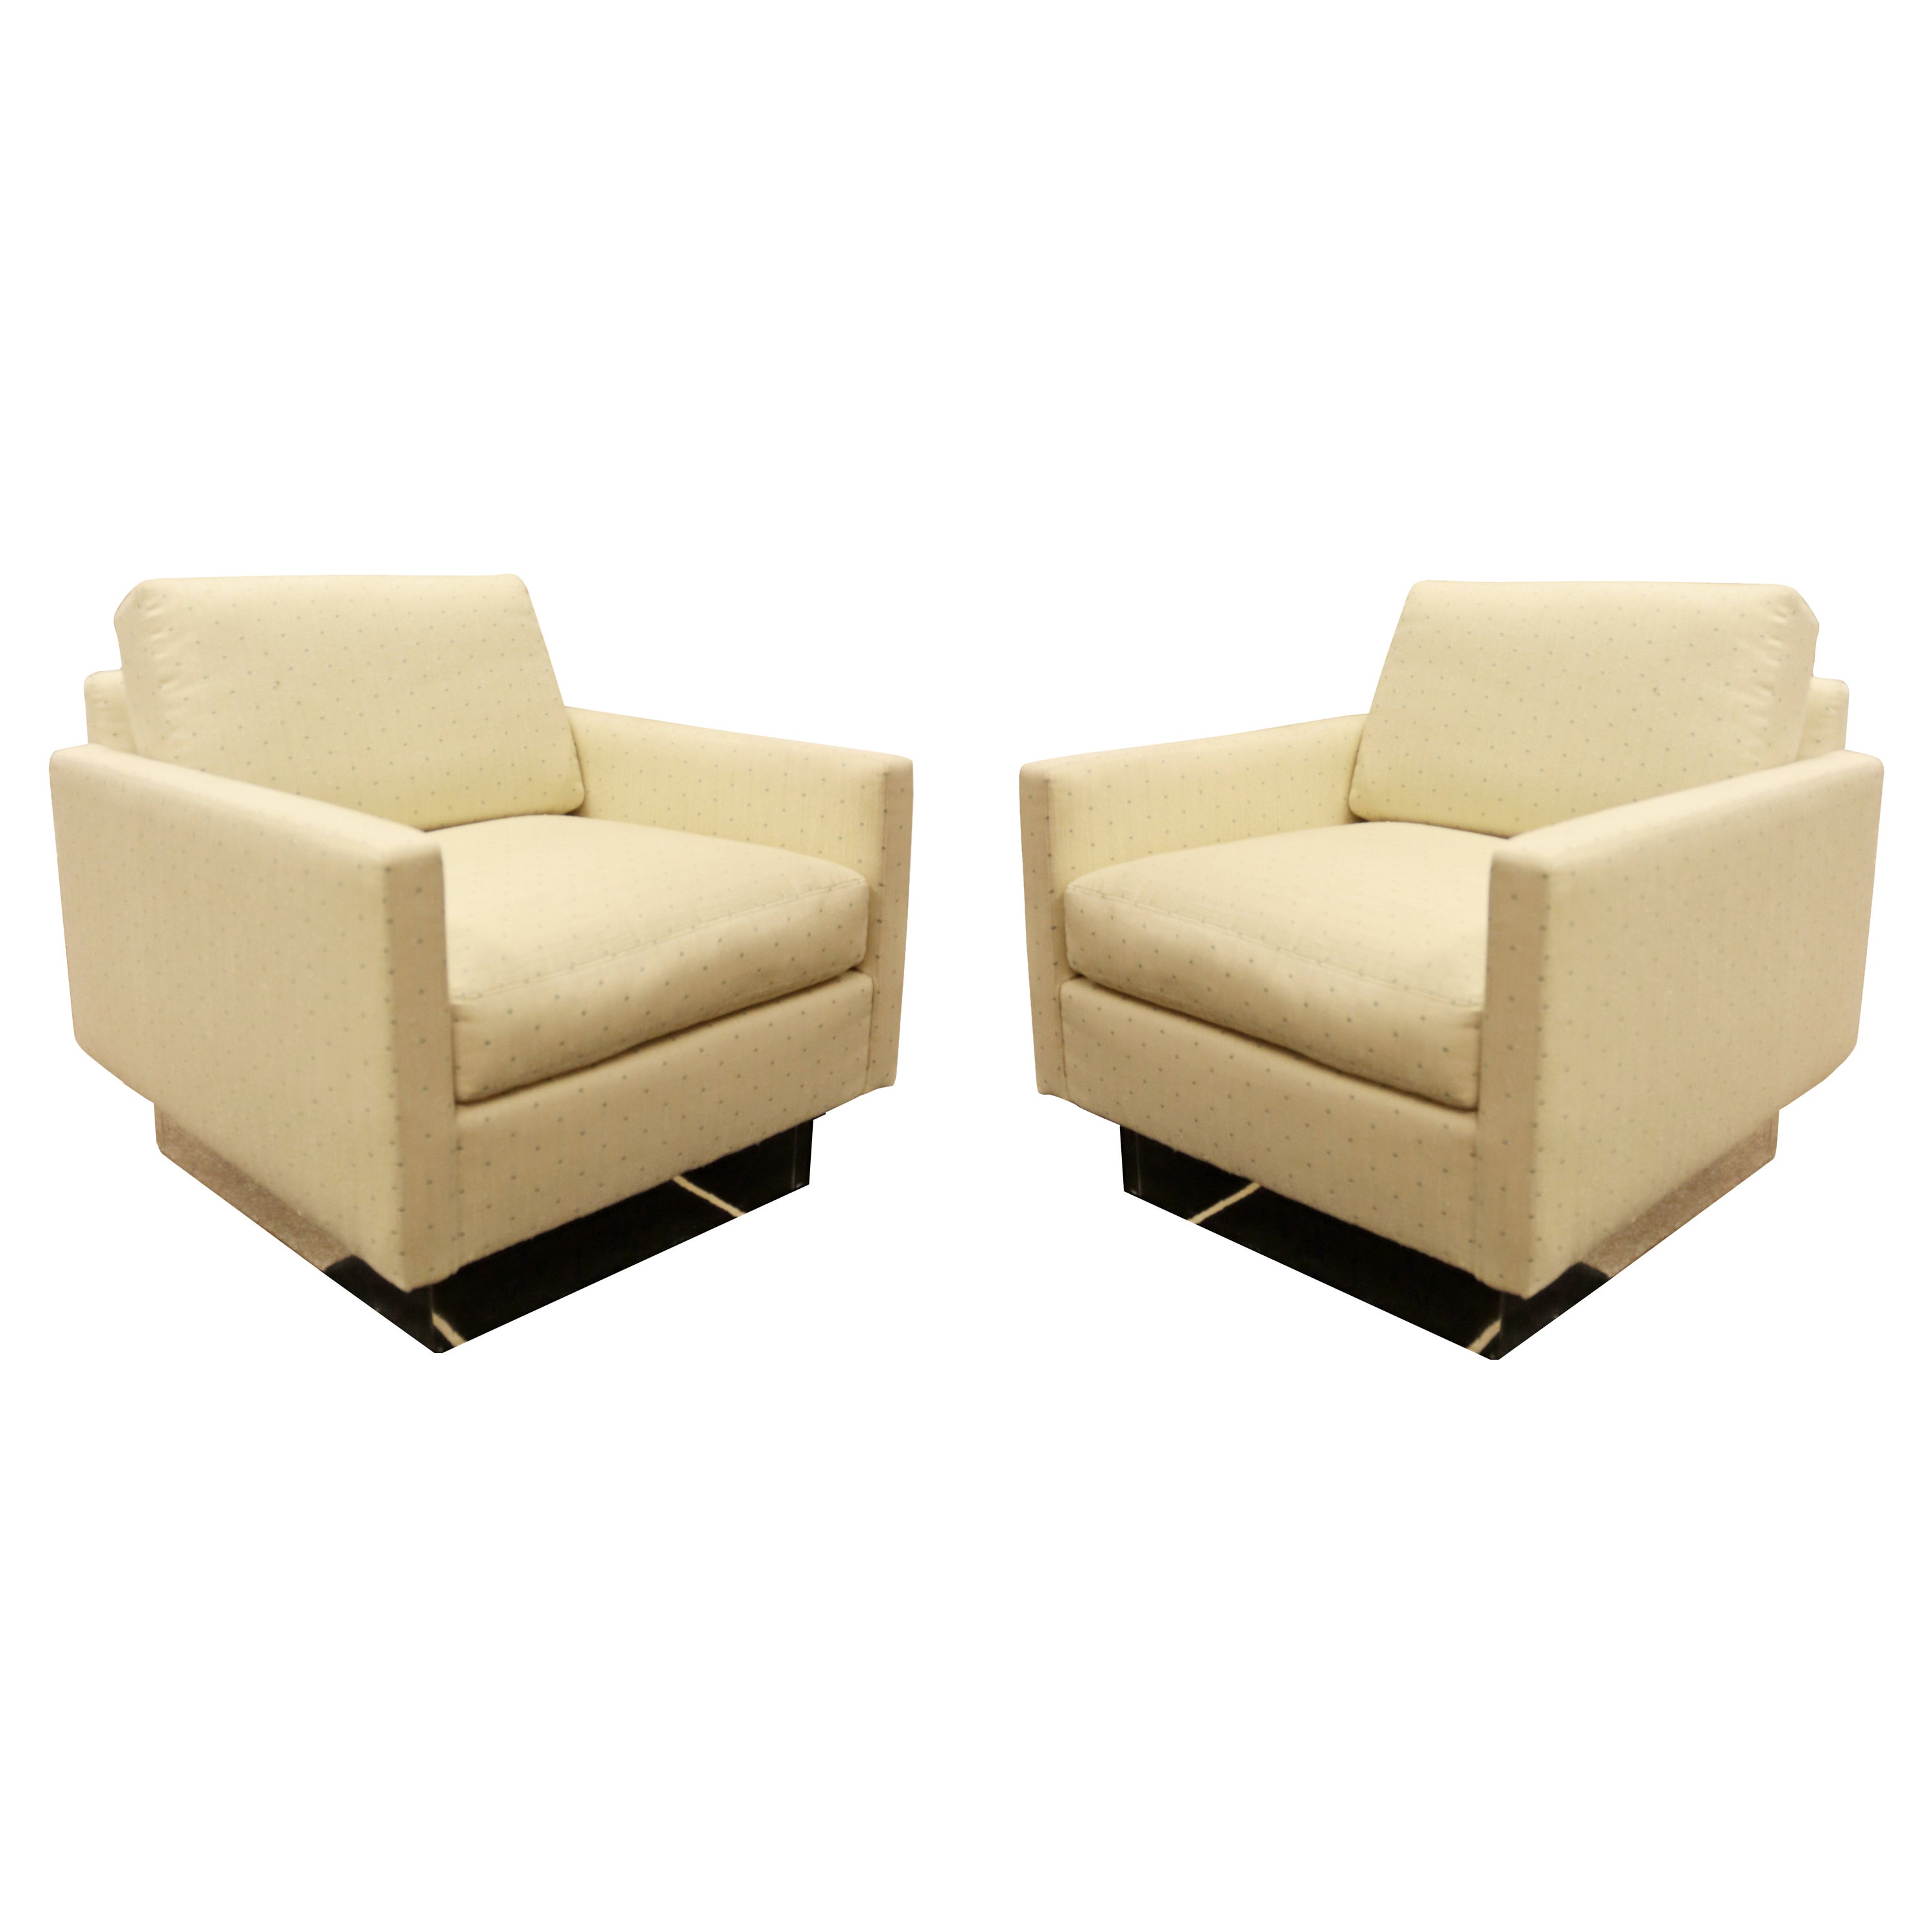 Mid-Century Modern Pair of Baughman Chrome Plinth Base Cube Lounge Chairs 1970s